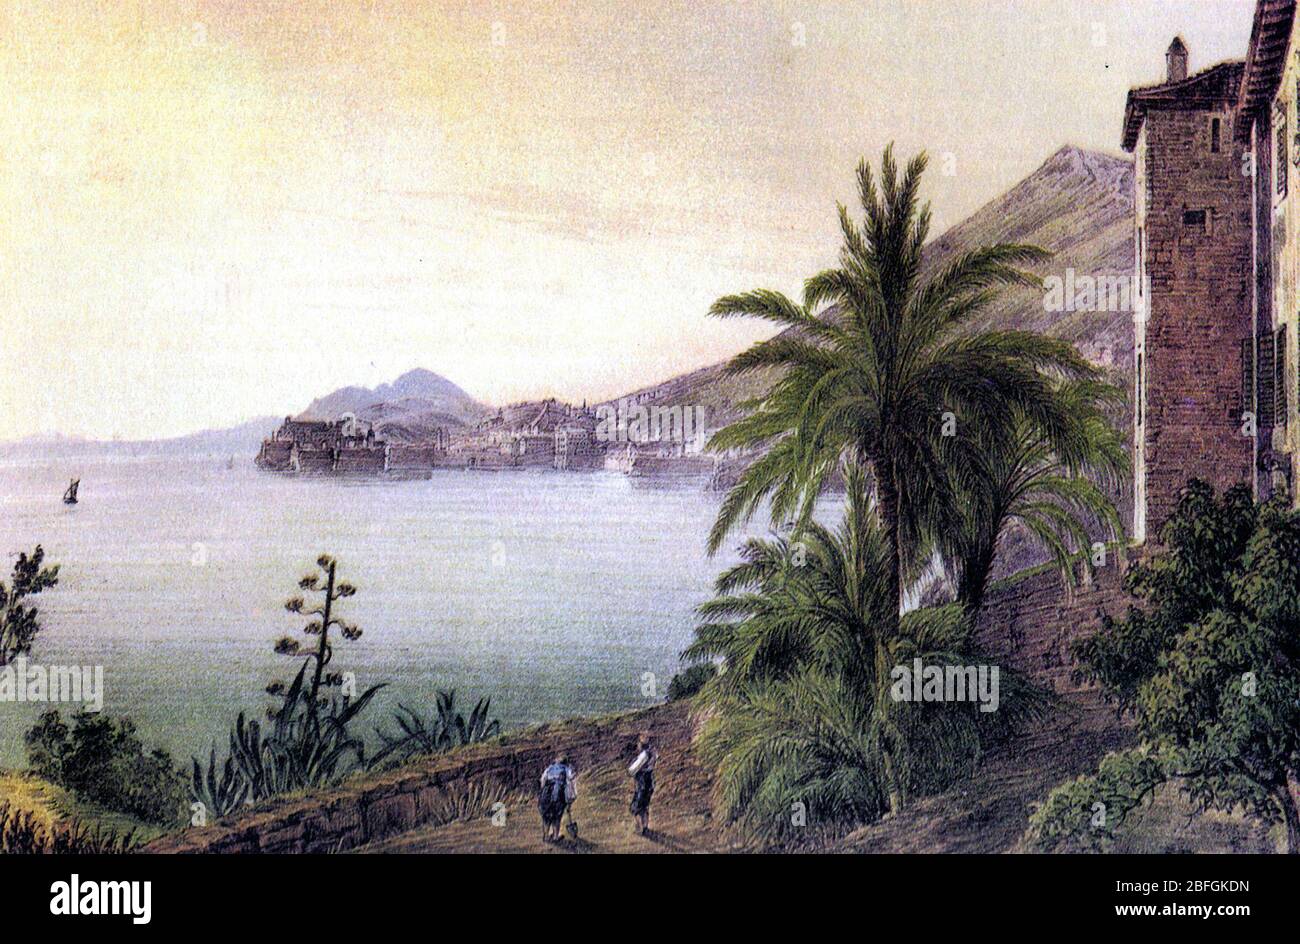 Dubrovnik (alors appelée Ragusa) vers 1840 - Jakob Alt Banque D'Images